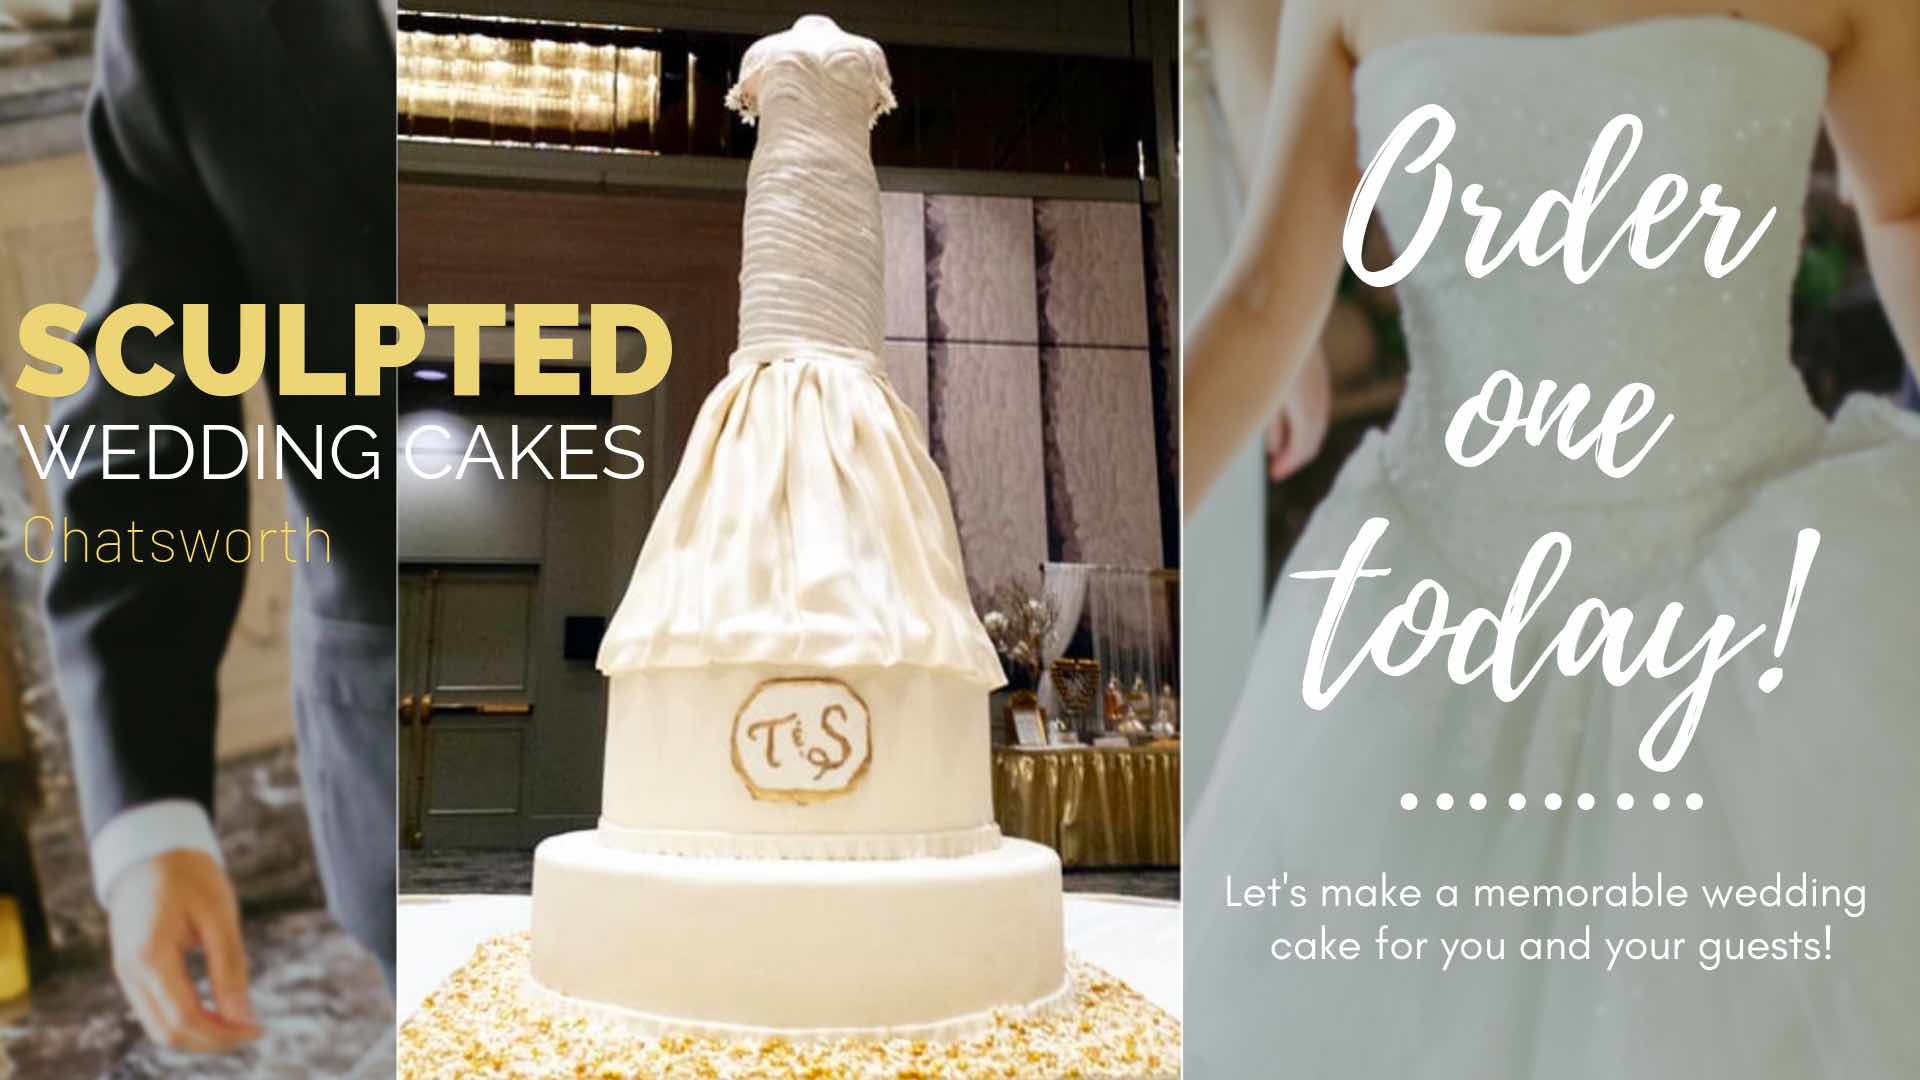 Wedding Cake Chatsworth